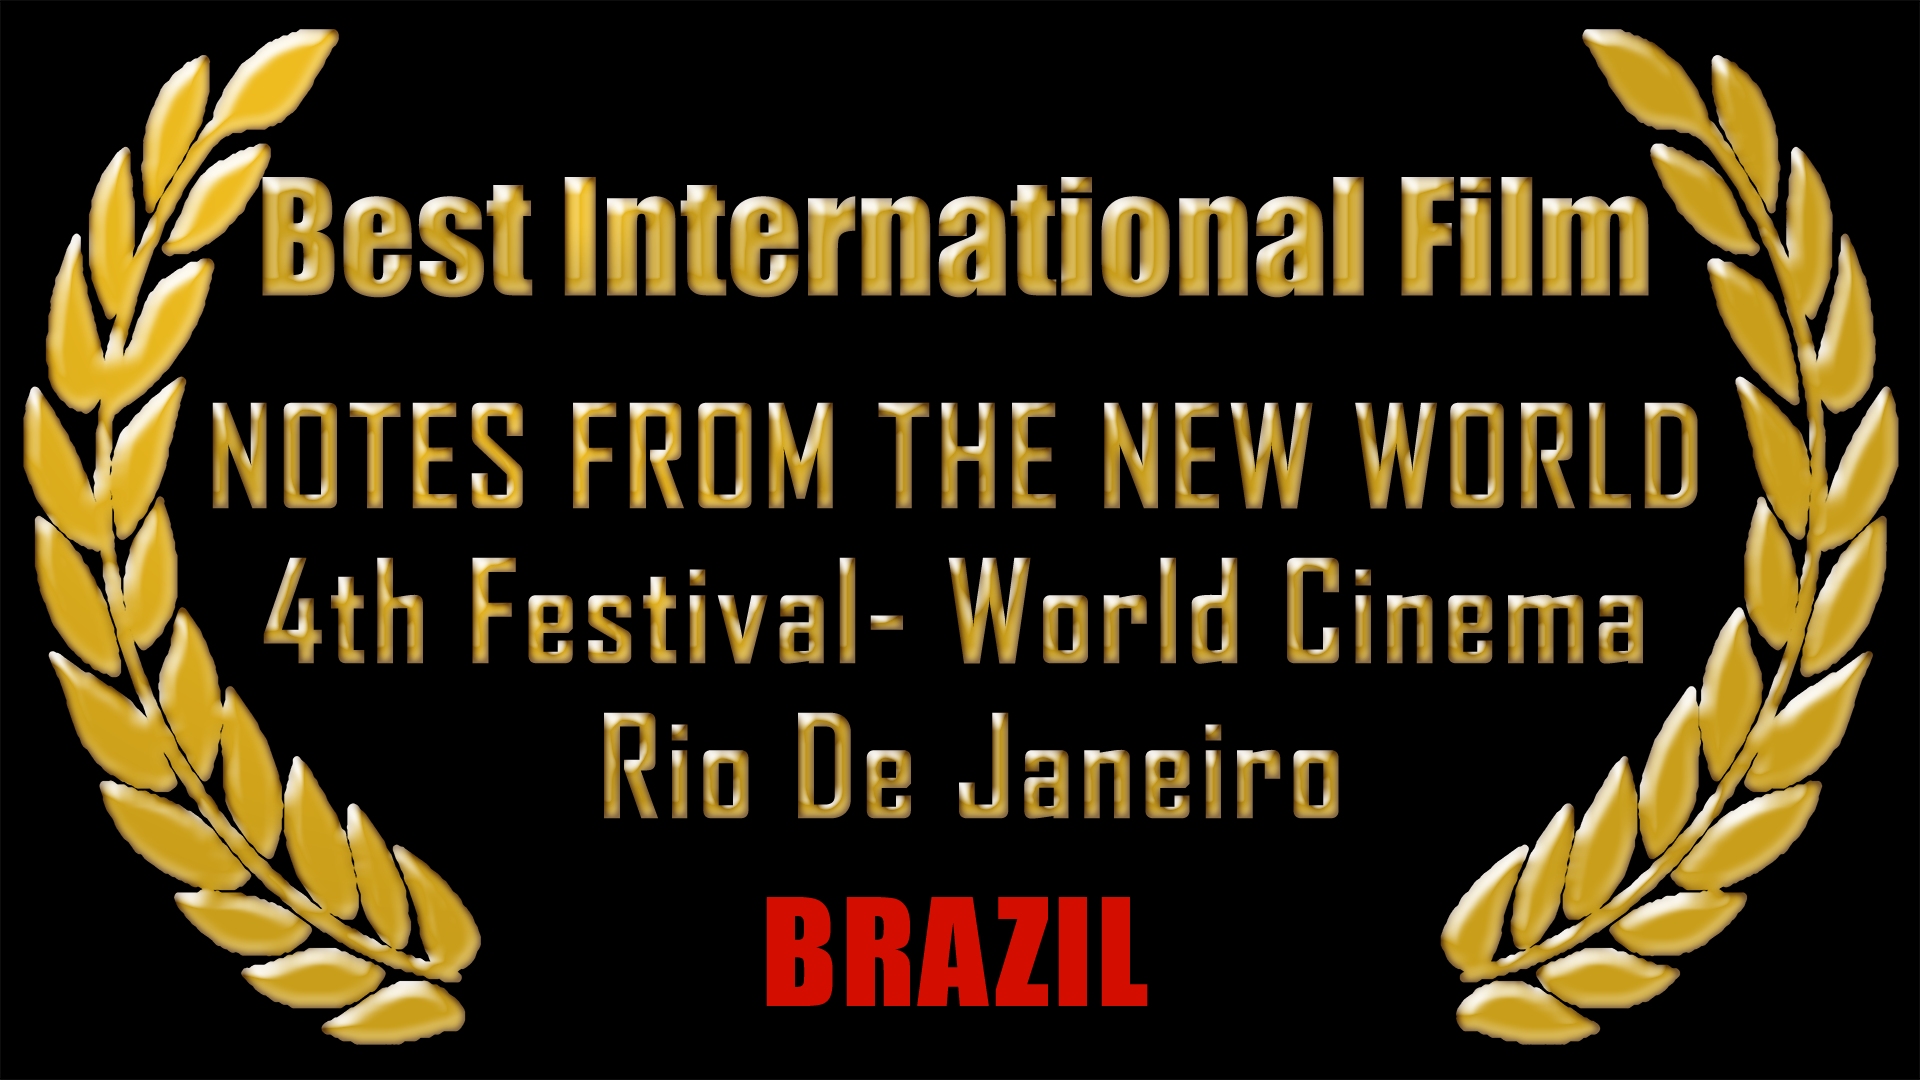 Best International Film, Brazil